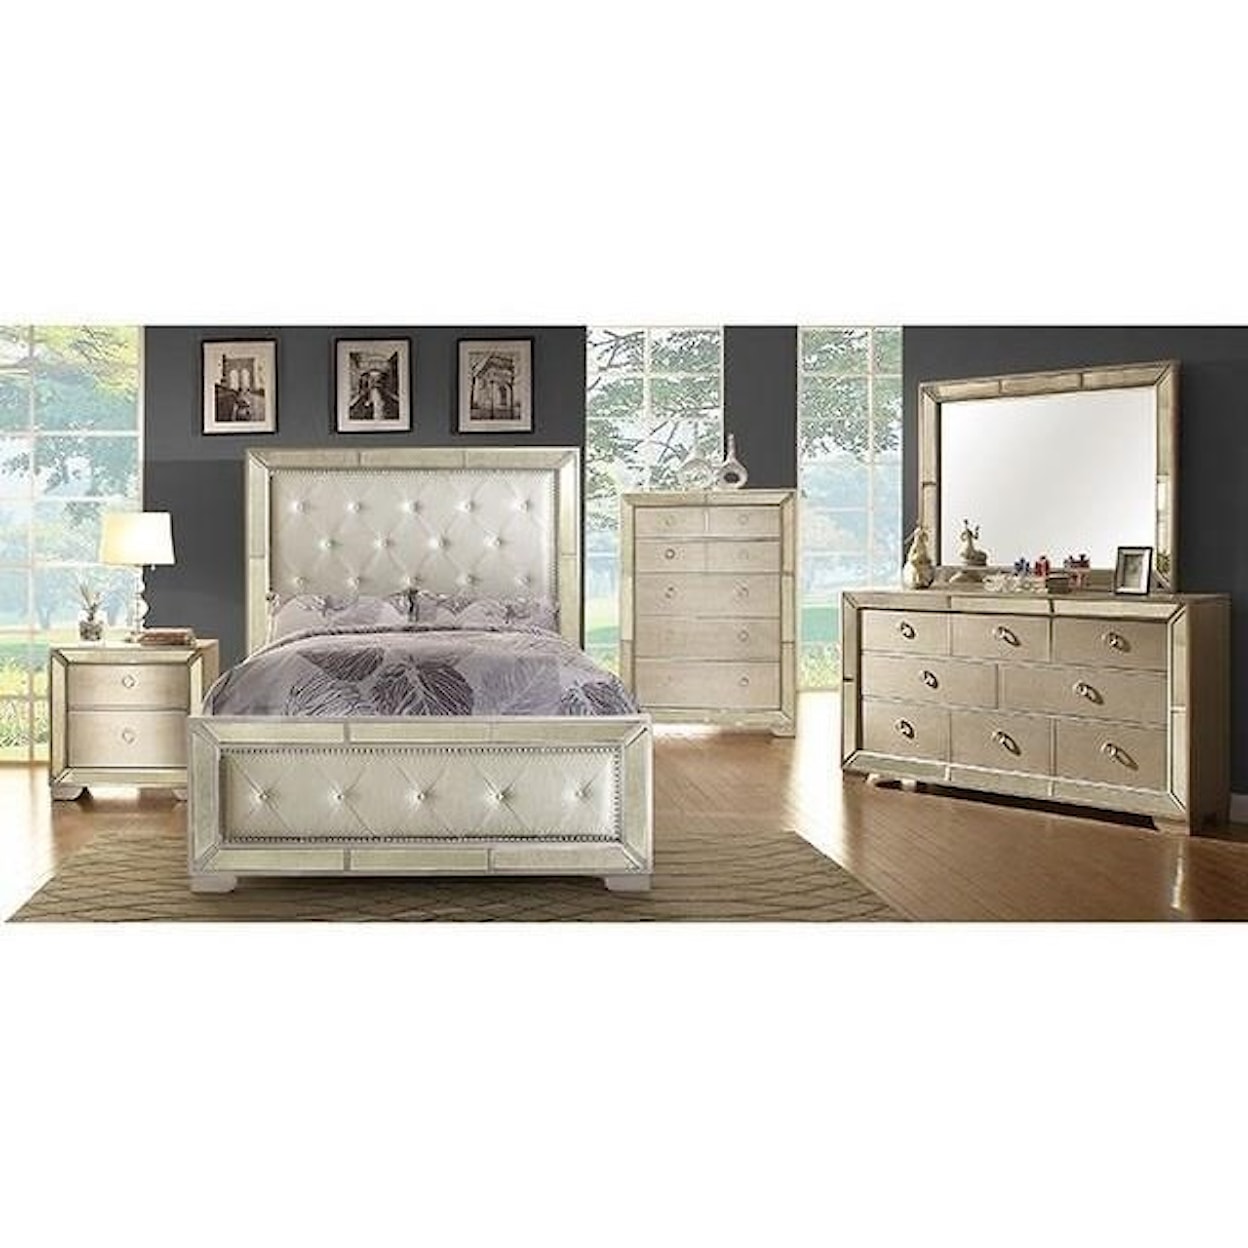 Furniture of America Loraine King Bed